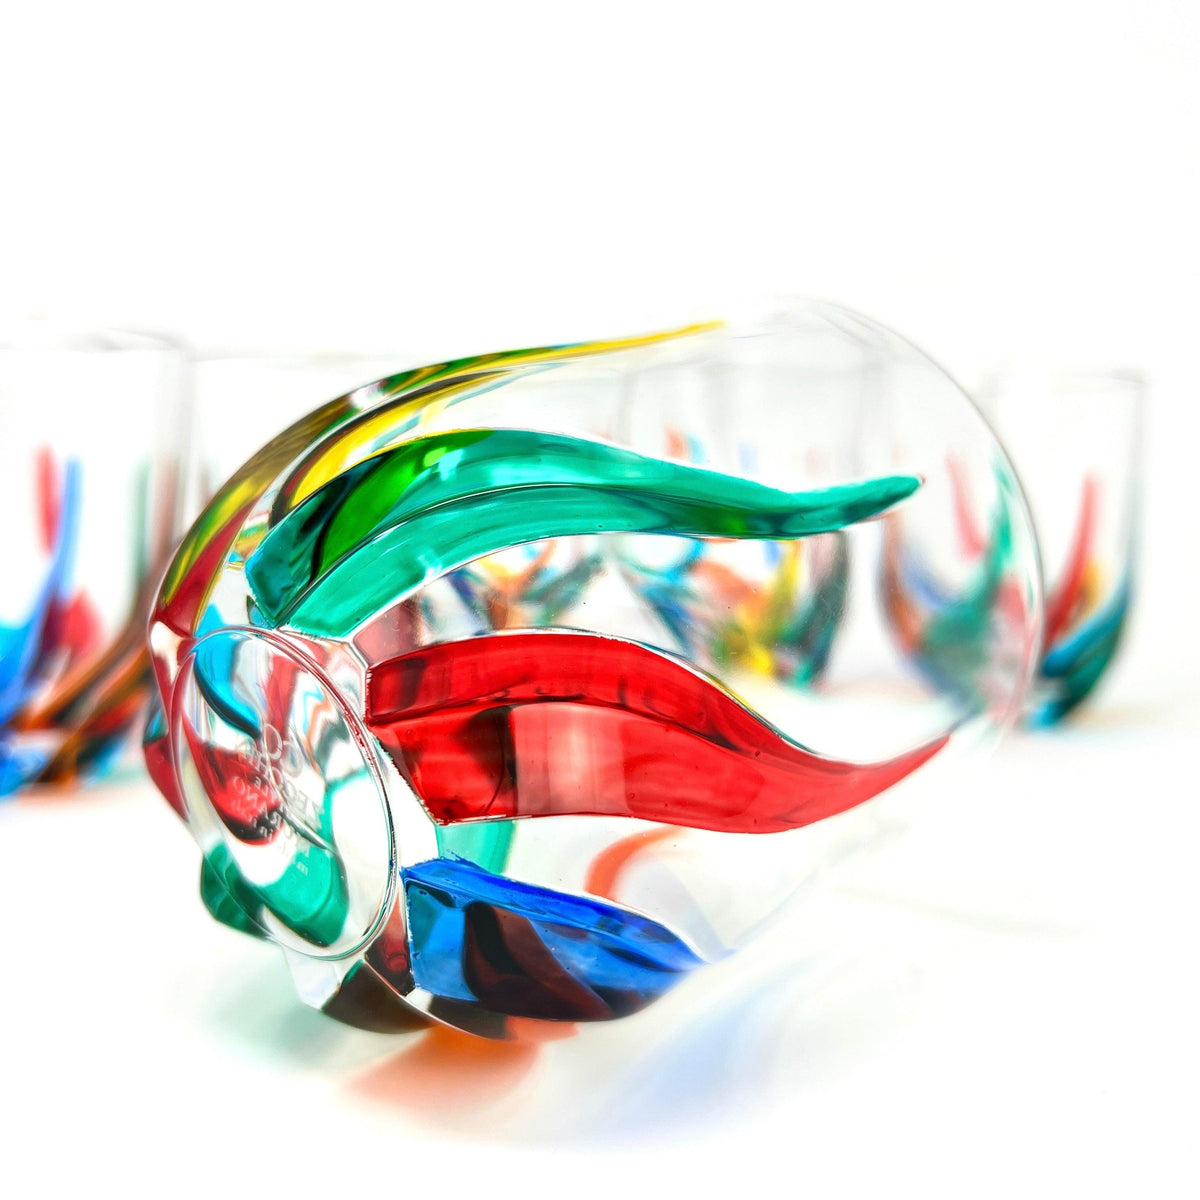 Trix Short Drink Glasses, Hand-Painted Italian Crystal, Set of 2 at MyItalianDecor